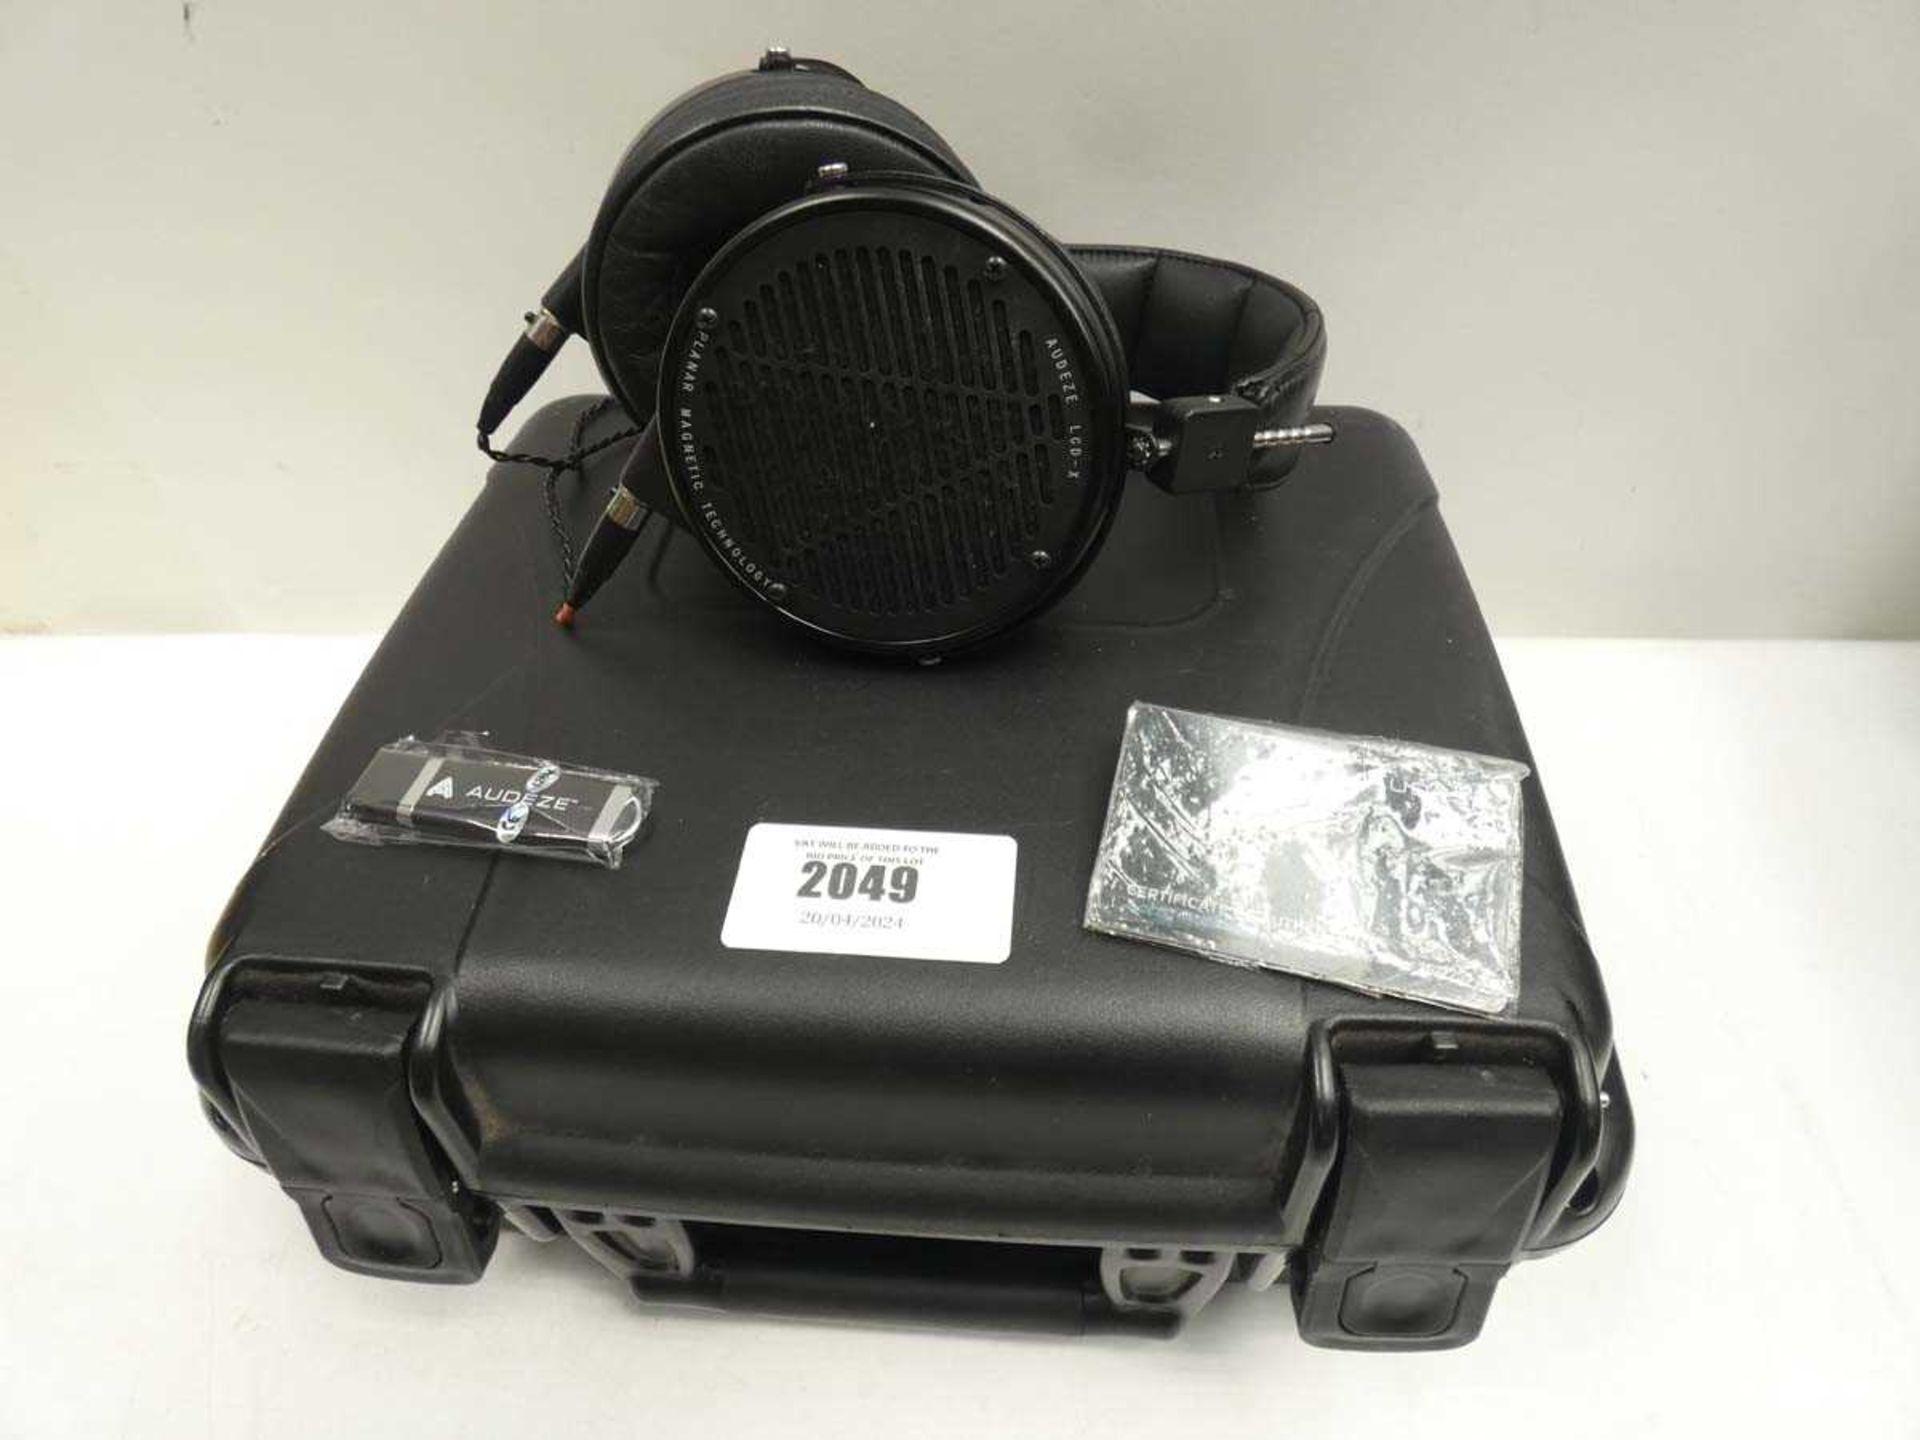 +VAT Audeze LCD-X Planar Magnetic Headphones with flight case